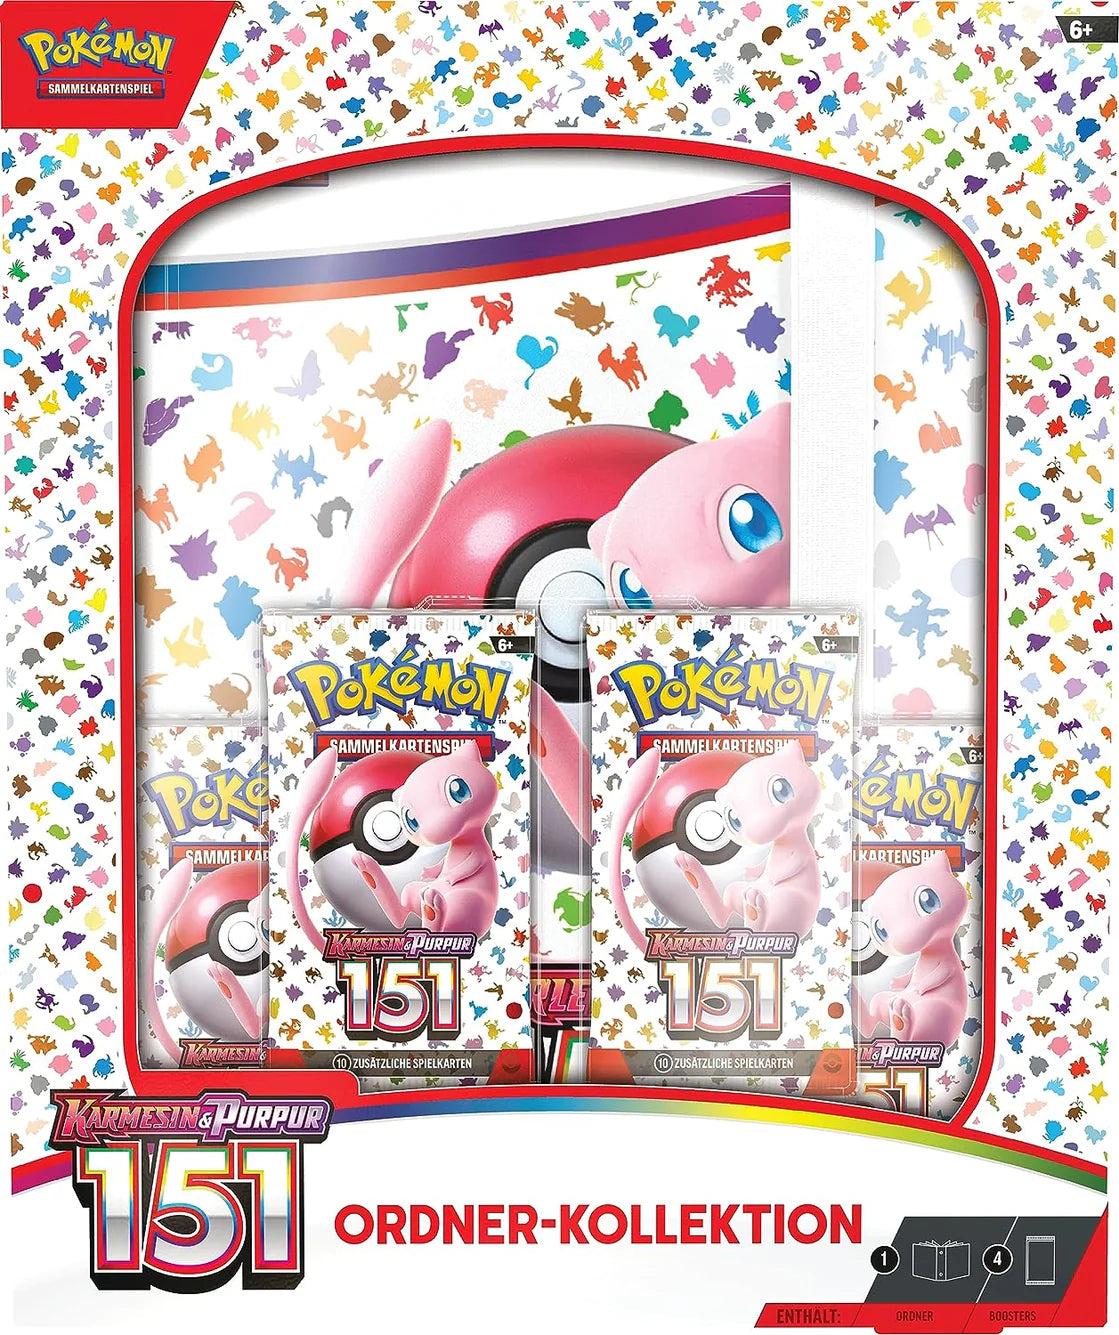 Pokémon TCG - Karmesin & Purpur Ordner Kollektion 151 - DE